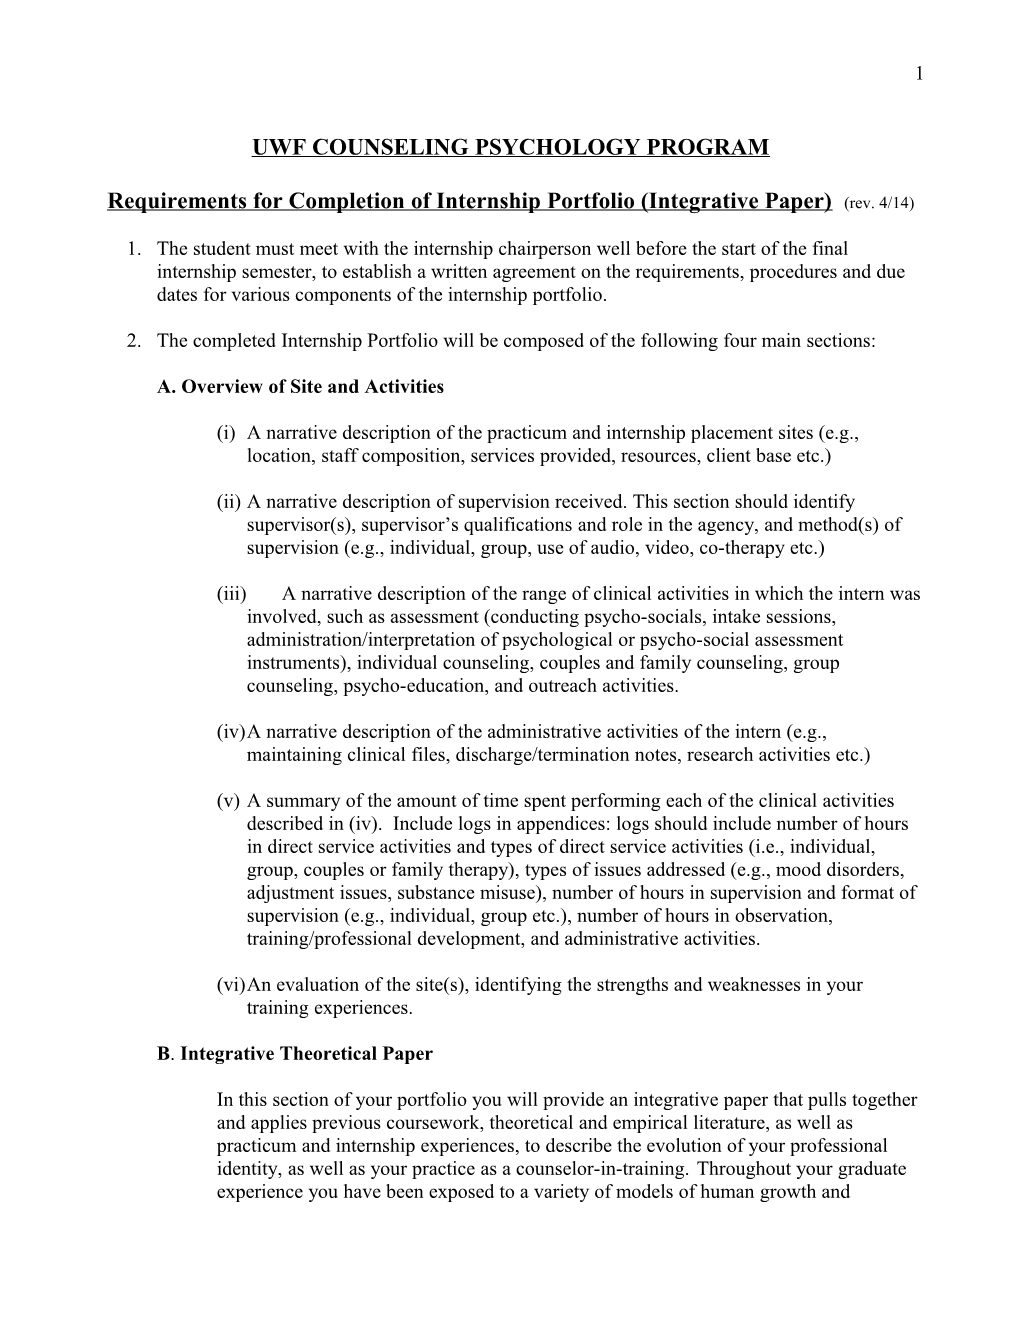 Requirements for Completion of Internship Portfolio